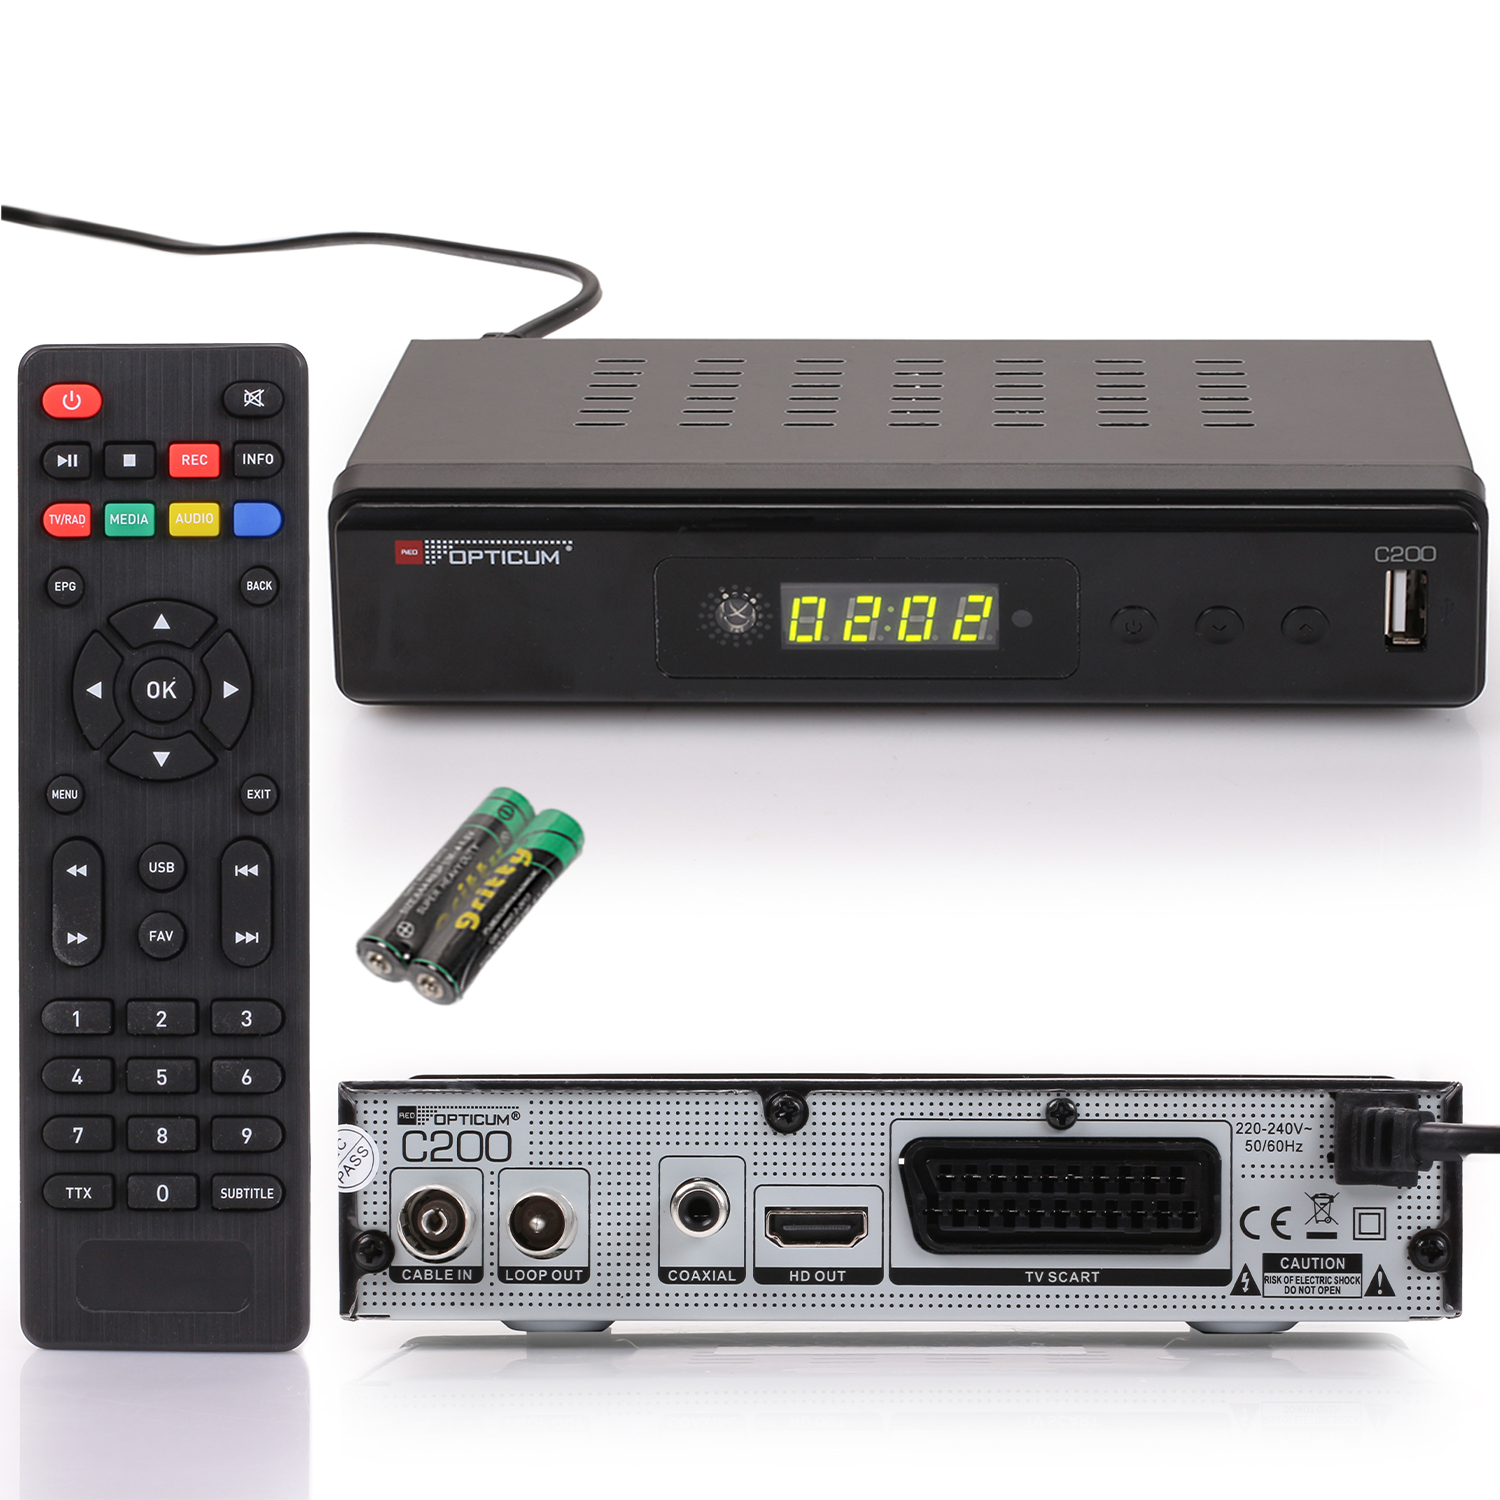 DVB-C2, EPG Kabel-Receiver Receiver (HDTV, schwarz) DVB-C, Kabelreceiver - RED C200 HD Digitaler DVB-C I Aufnahmefunktion OPTICUM - PVR mit PVR-Funktion, HD HDMI-USB-SCART